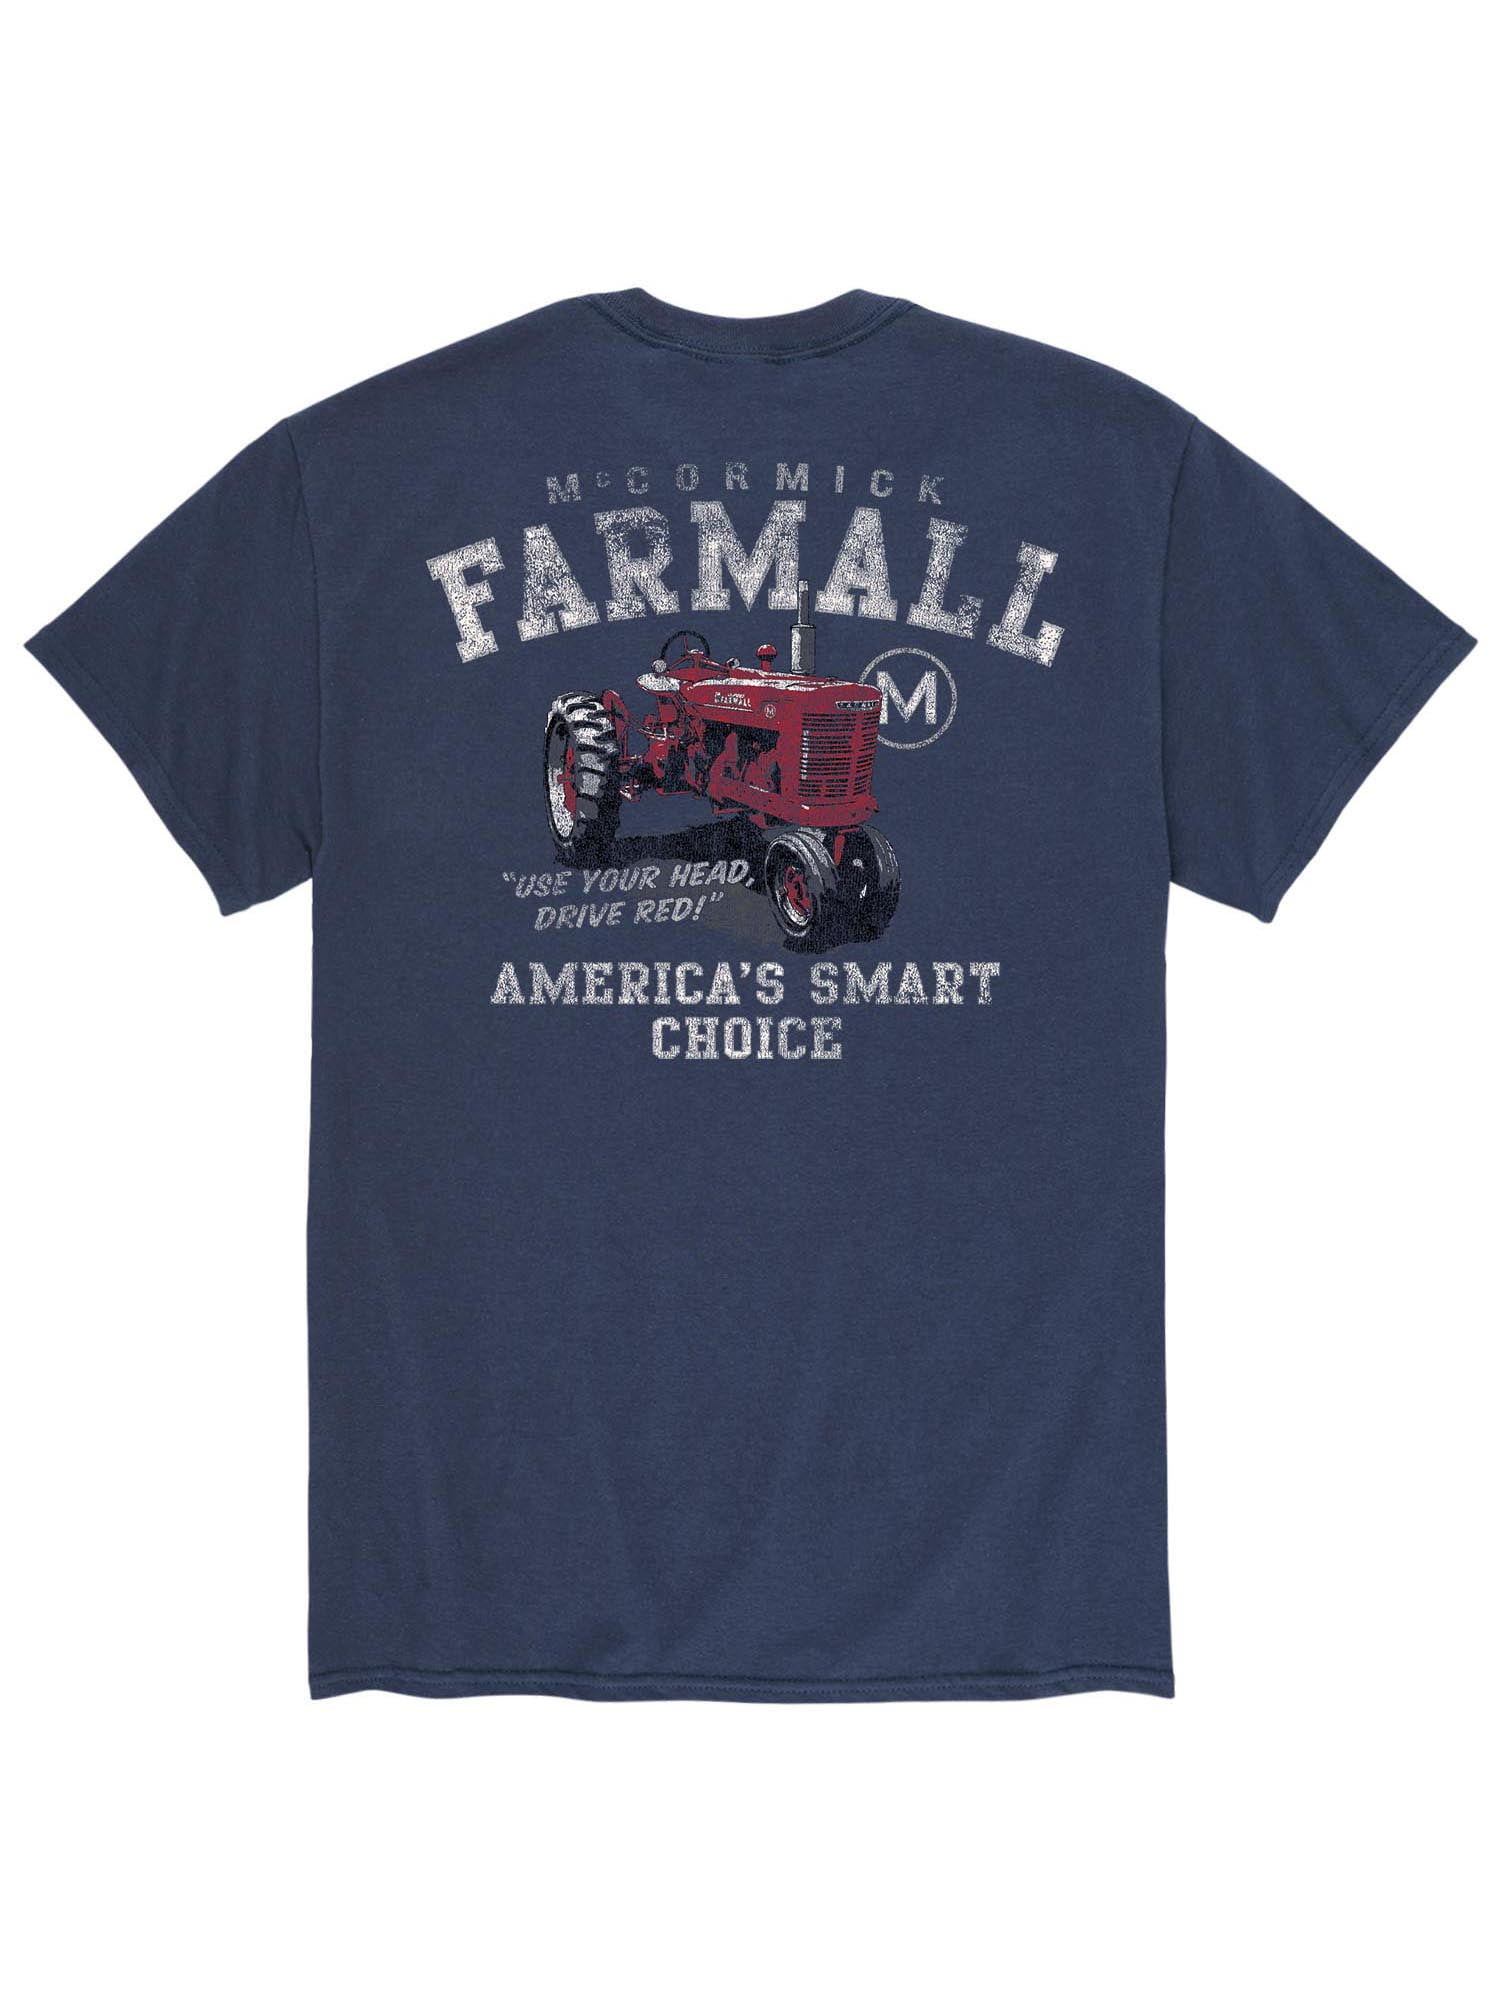 Case IH Farmall Smart Choice Men s Short Sleeve Graphic T Shirt f691caf1 cfa4 4b04 bbae de883a9b5fdf.ba5da6557a698ca0be13265952ffe40e